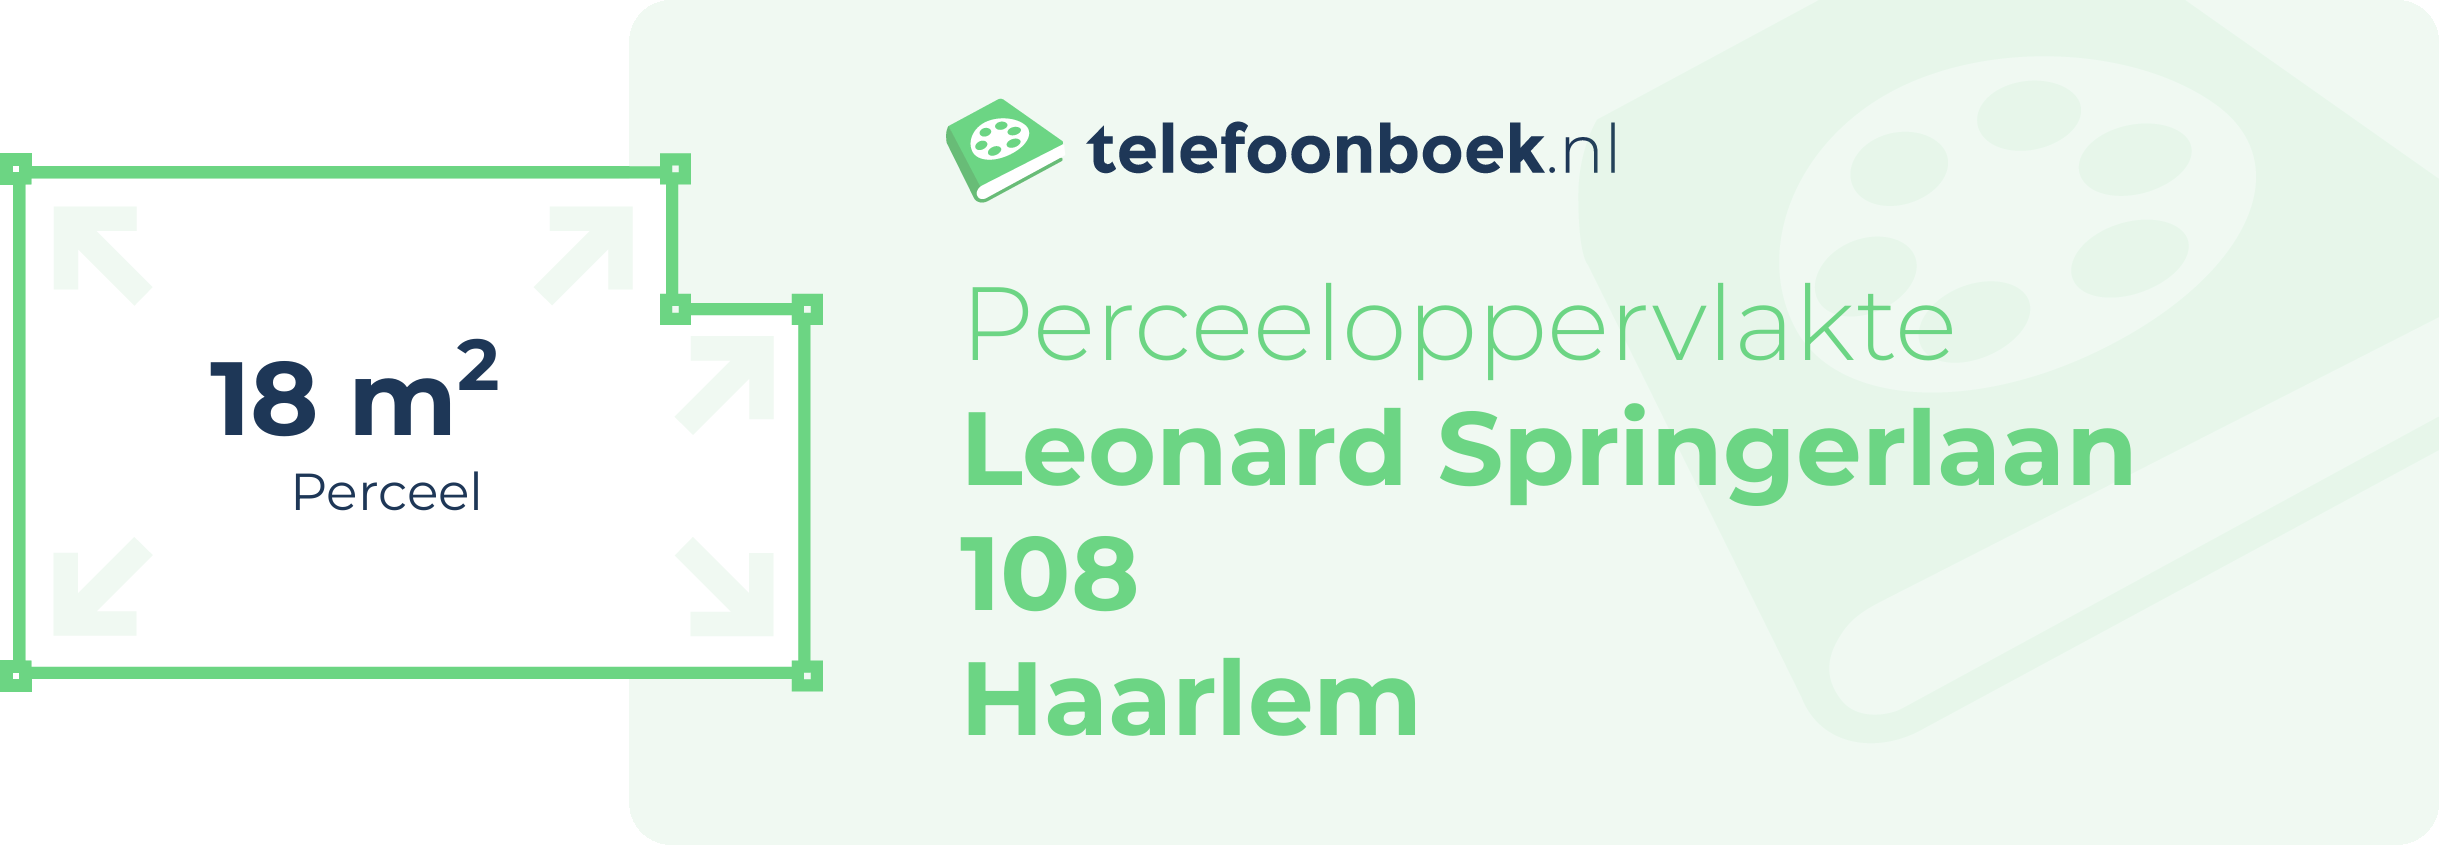 Perceeloppervlakte Leonard Springerlaan 108 Haarlem